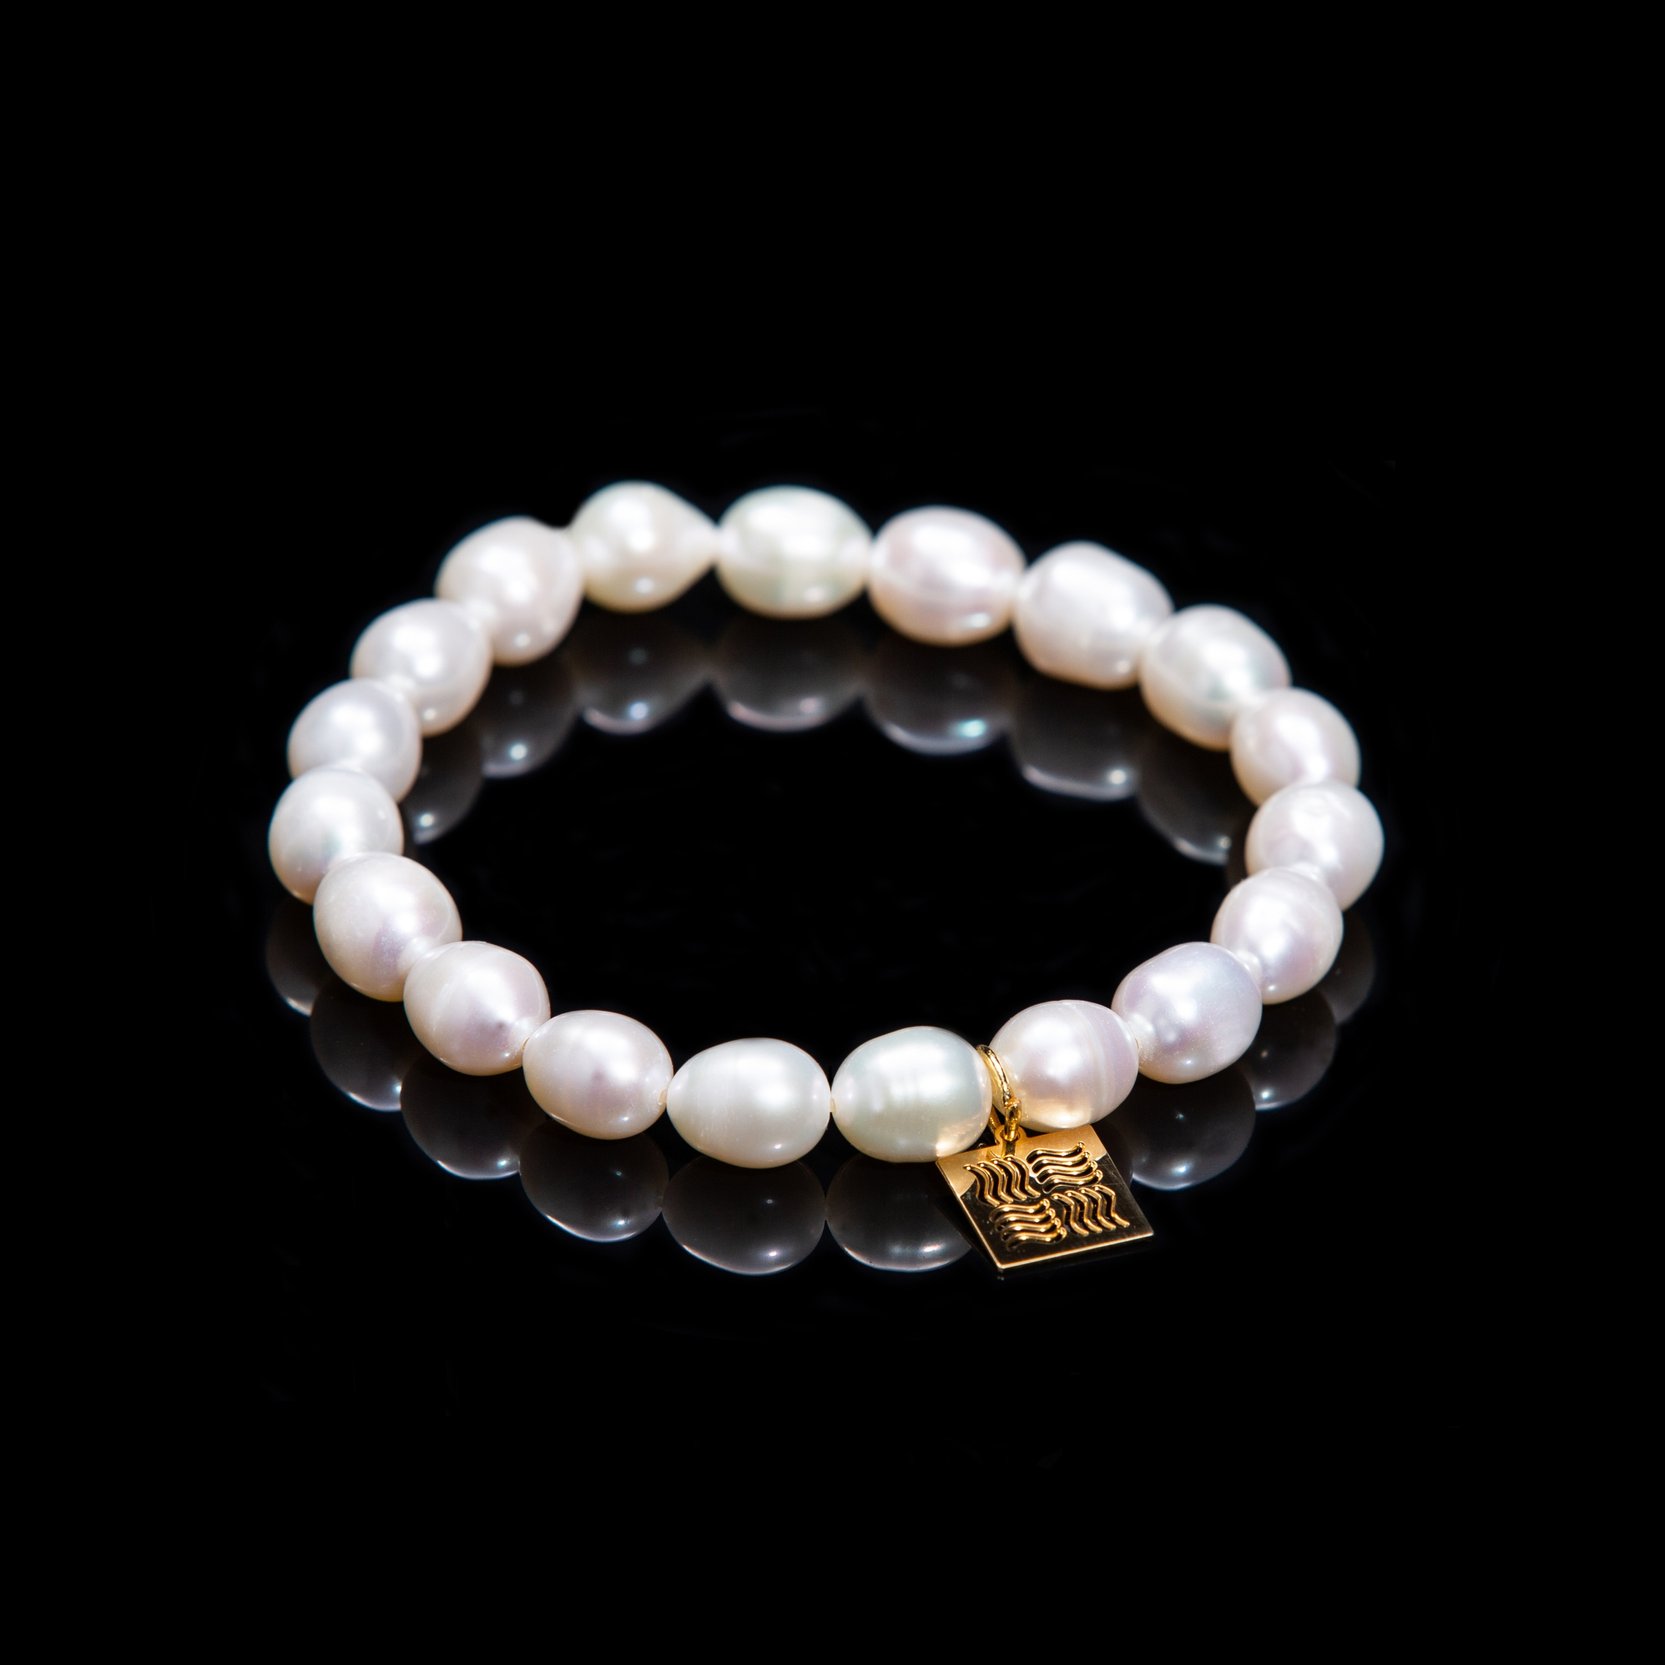 Elegant bracelet made of natural white pearls